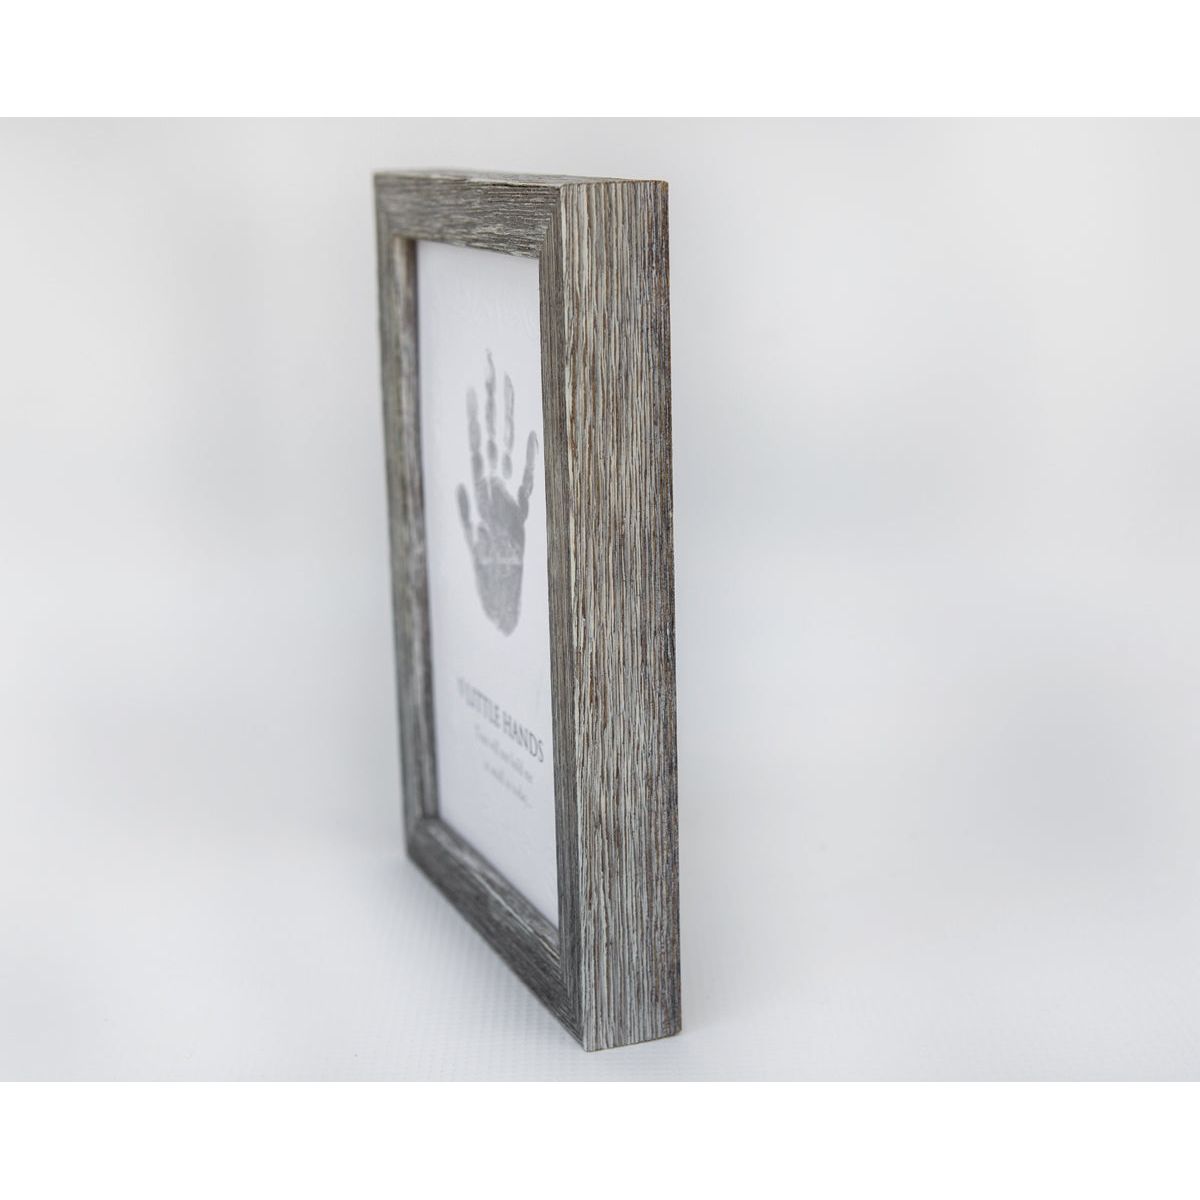 Godfather Frame: Handprint Keepsake 5x7